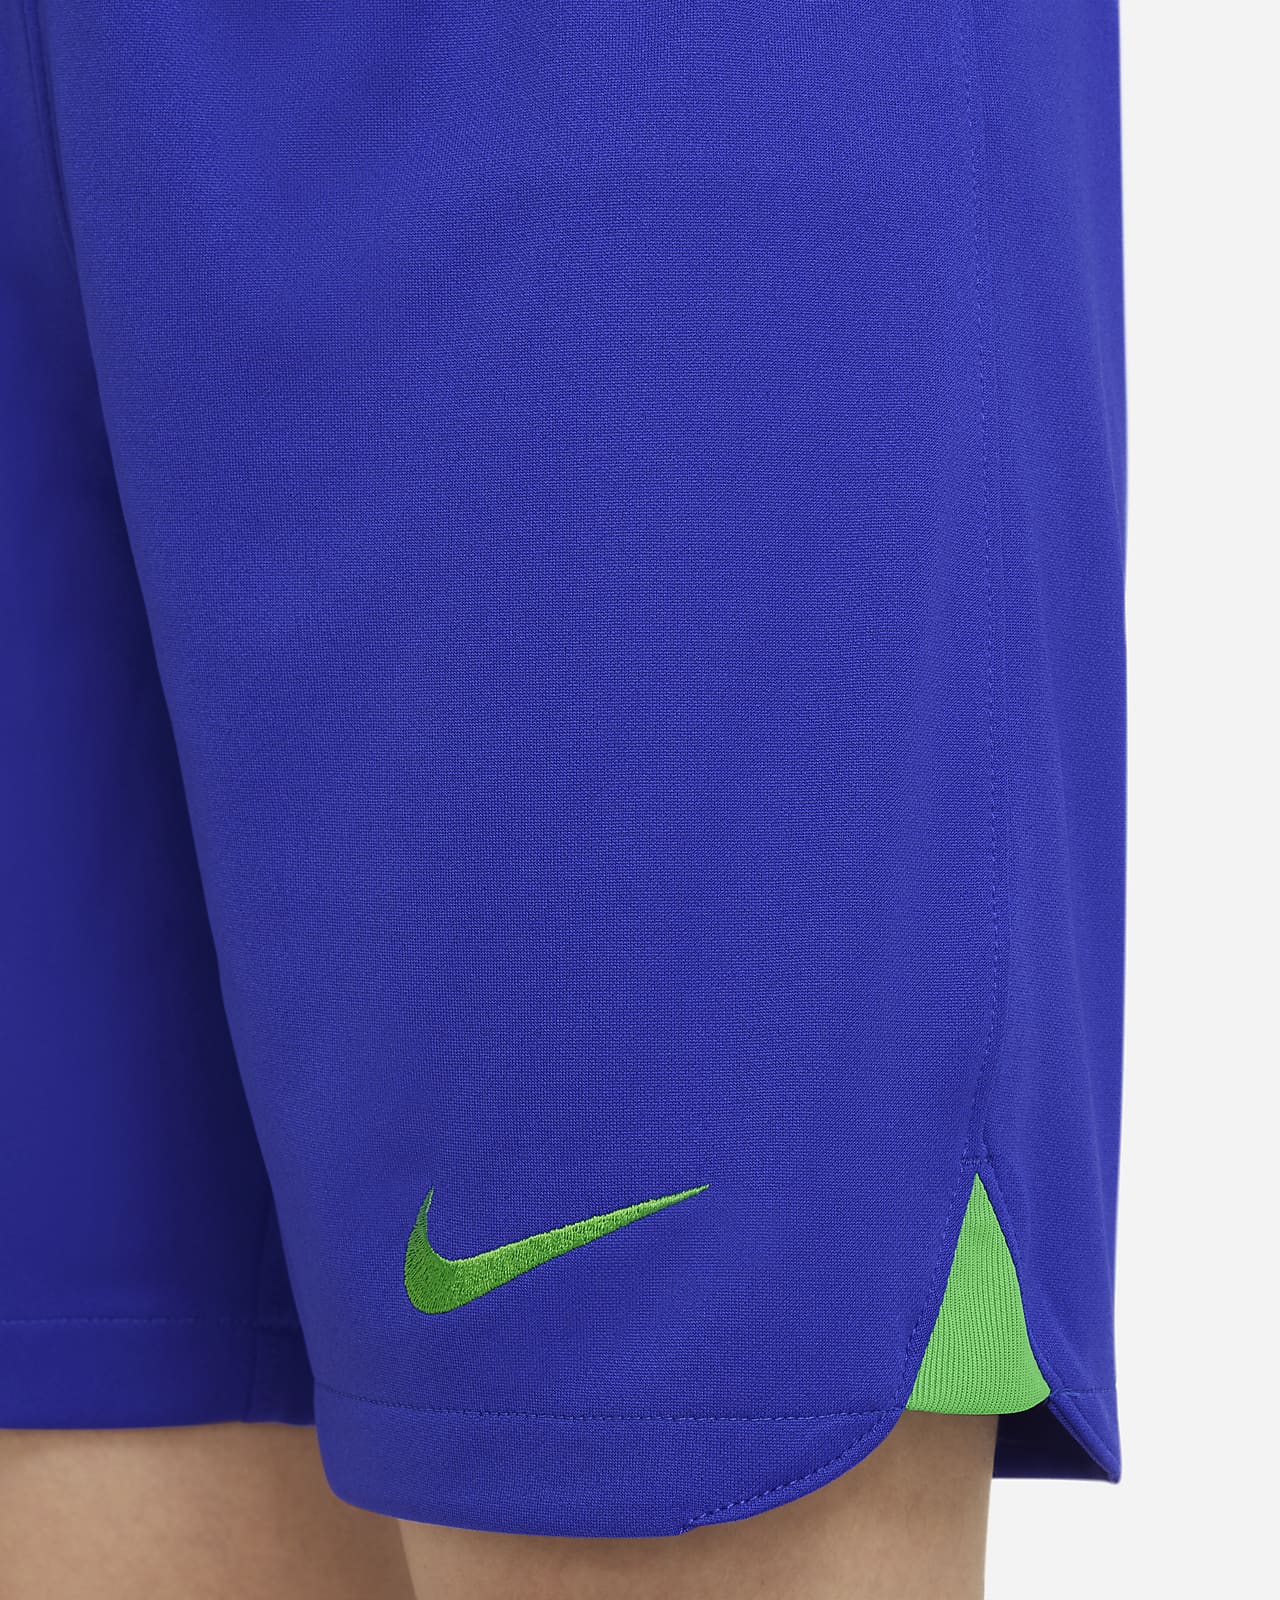 nike purple soccer shorts